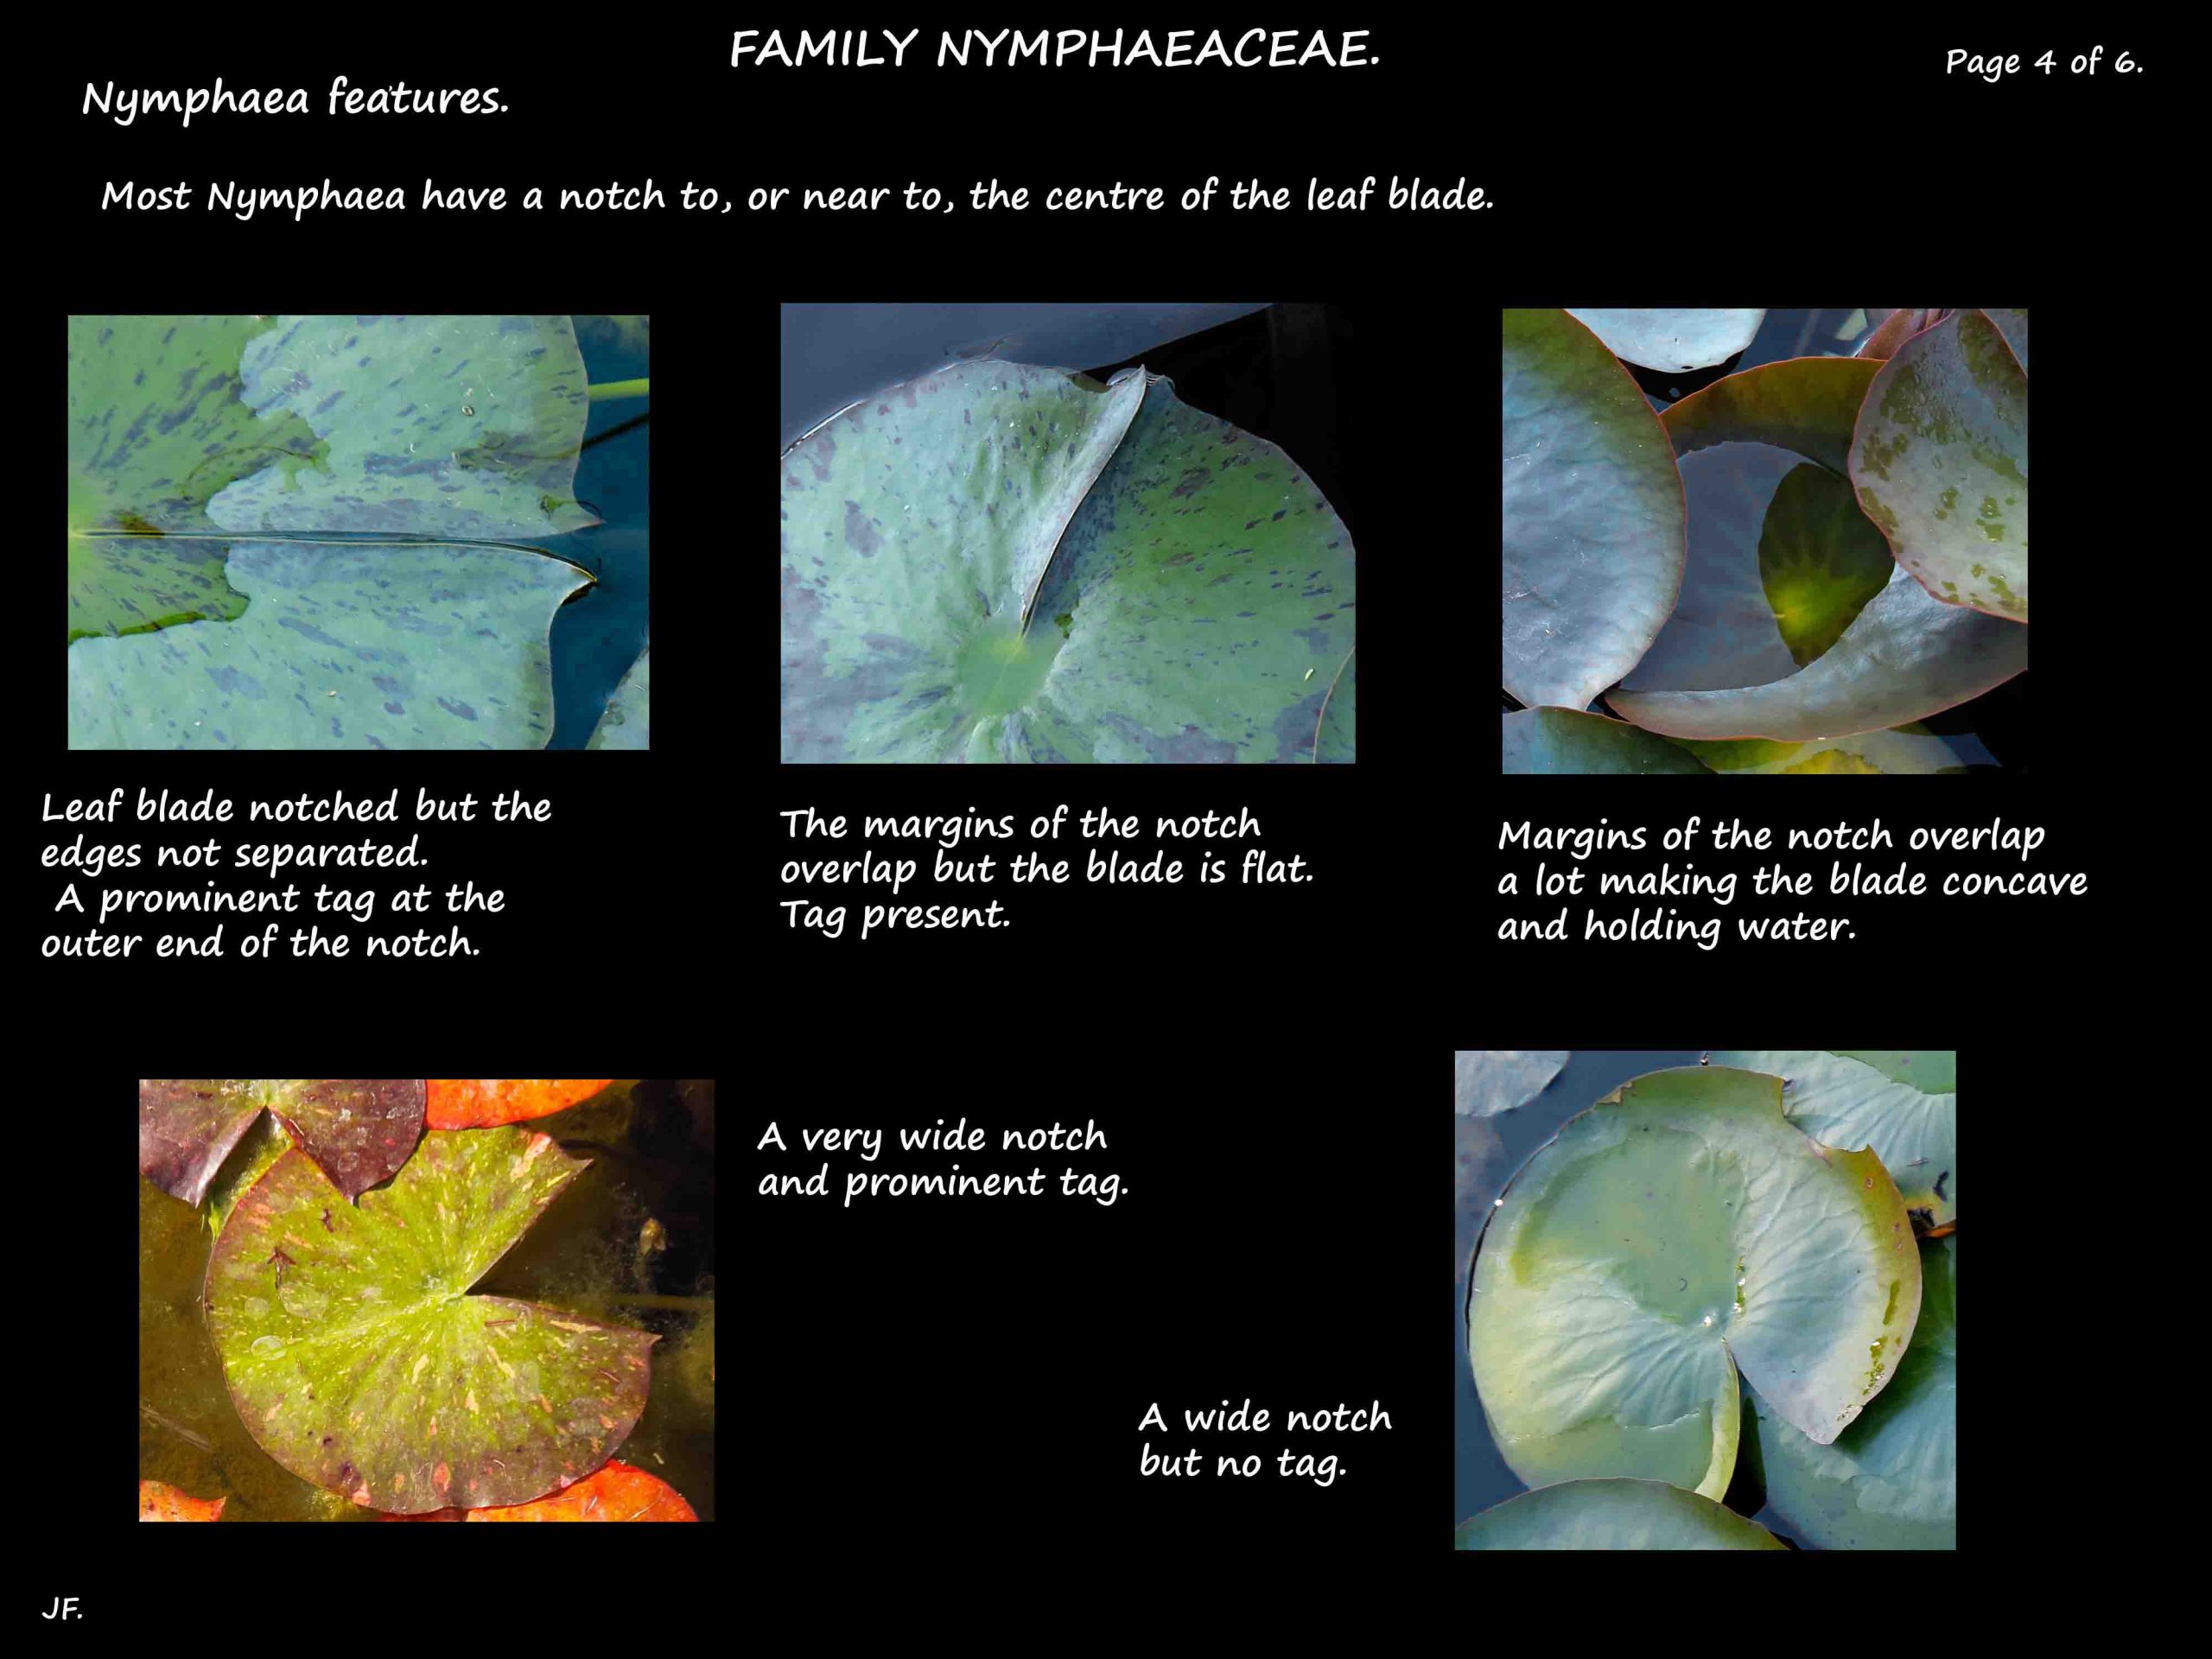 4 Leaf notch in Nymphaea